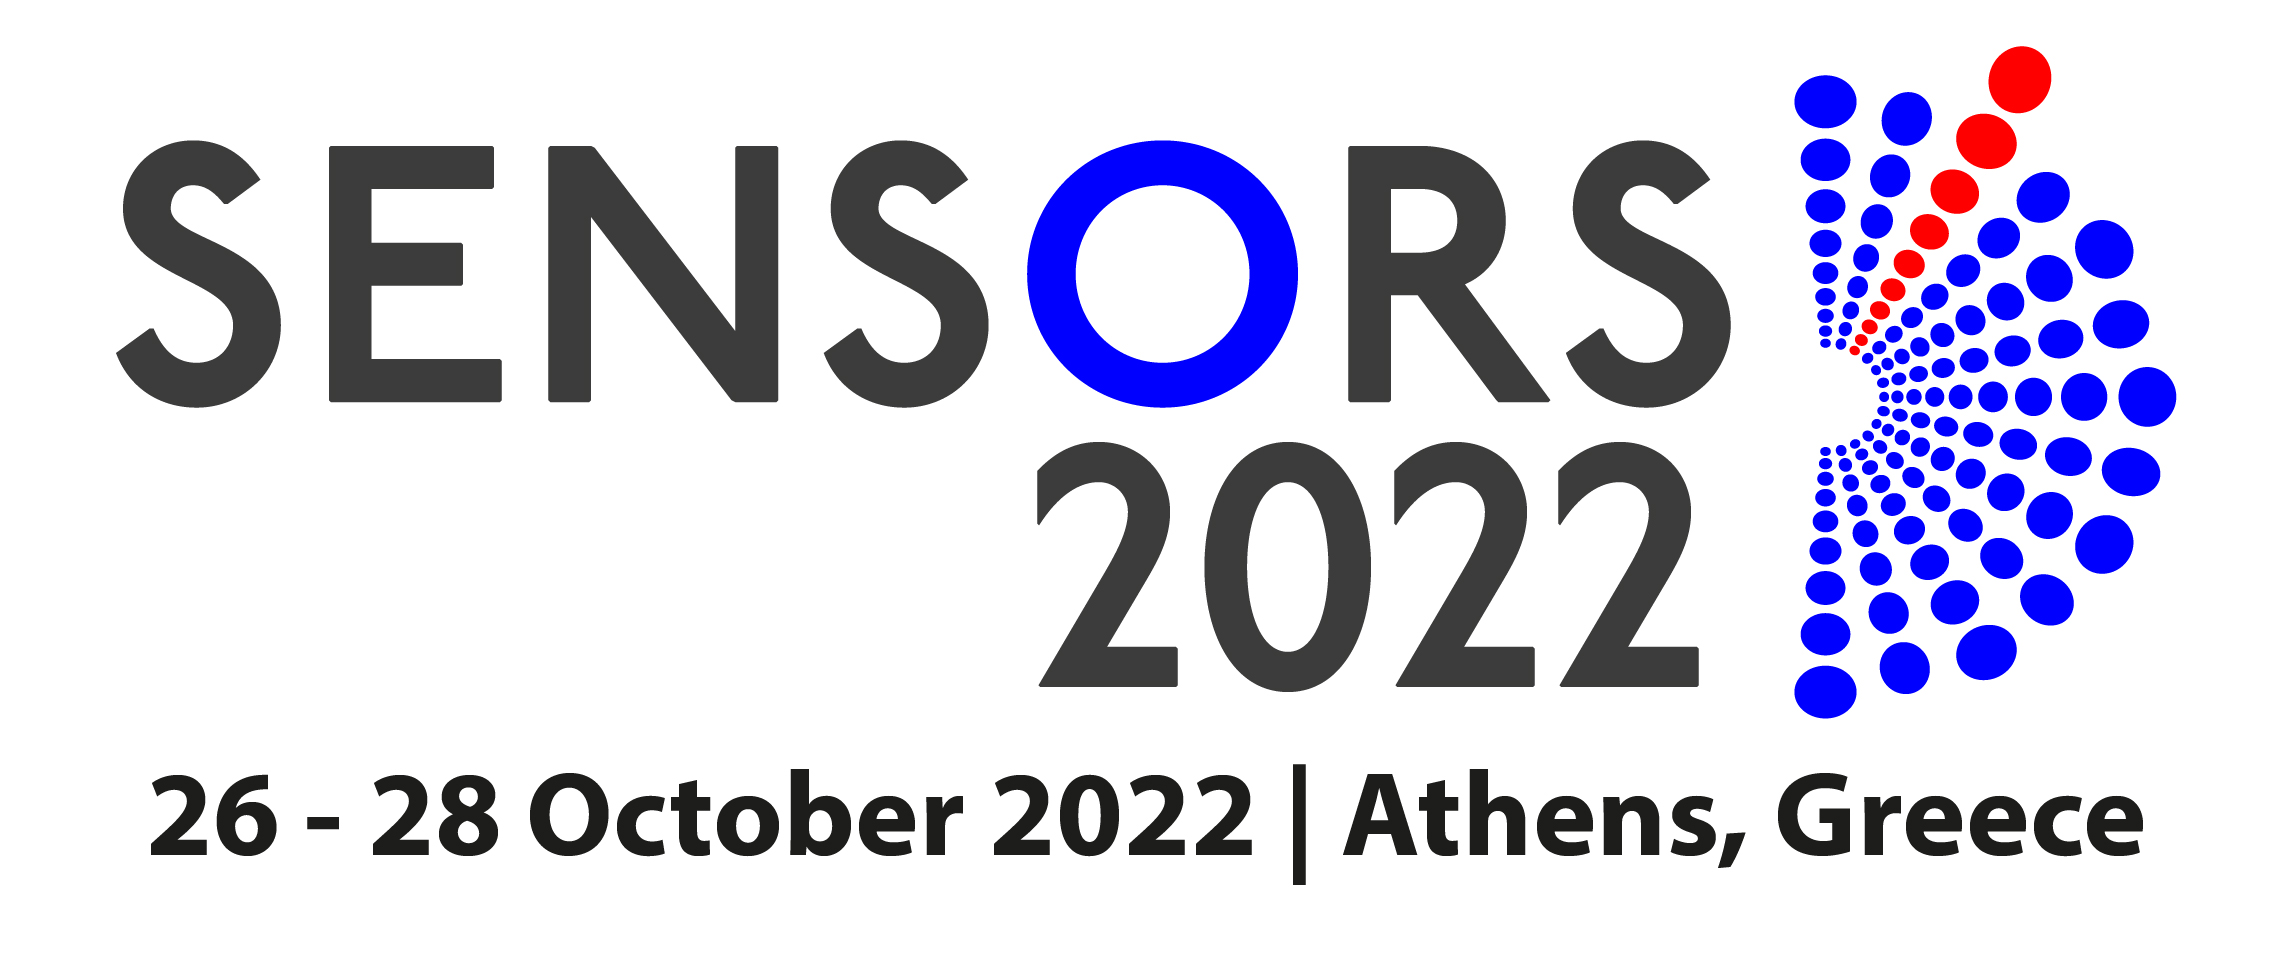 Sensors Technologies International conference - Sensors 2022